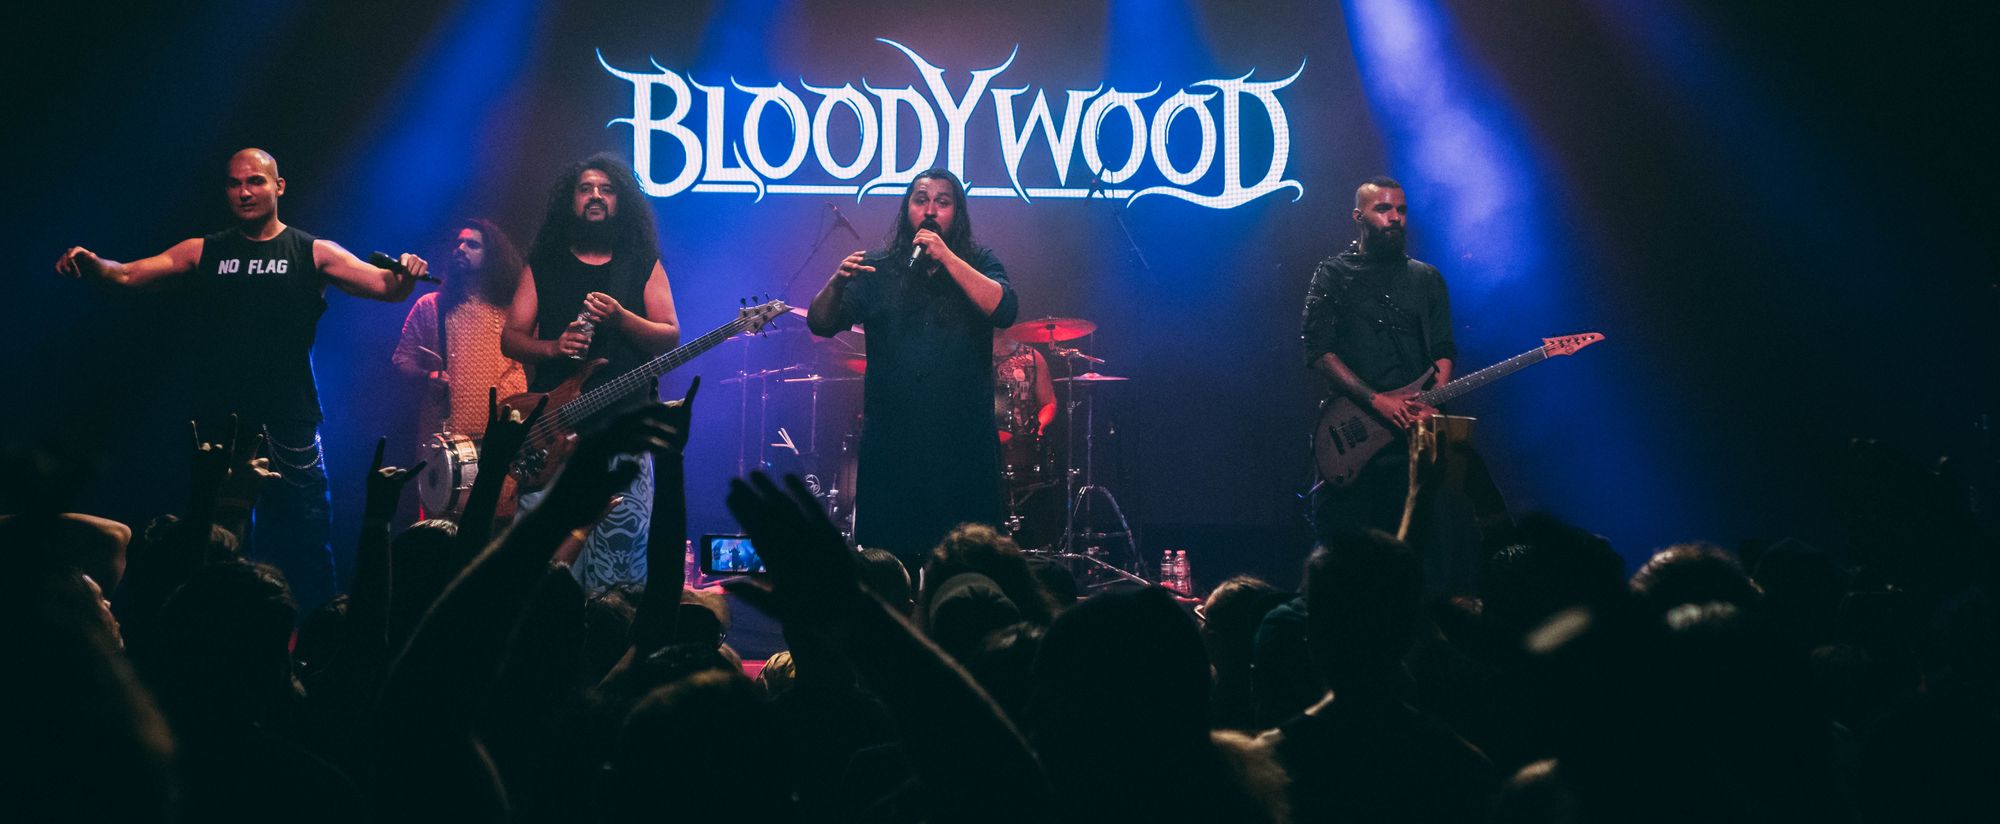 Bloodywood - The Gift of New Delhi Visit Dallas, TX